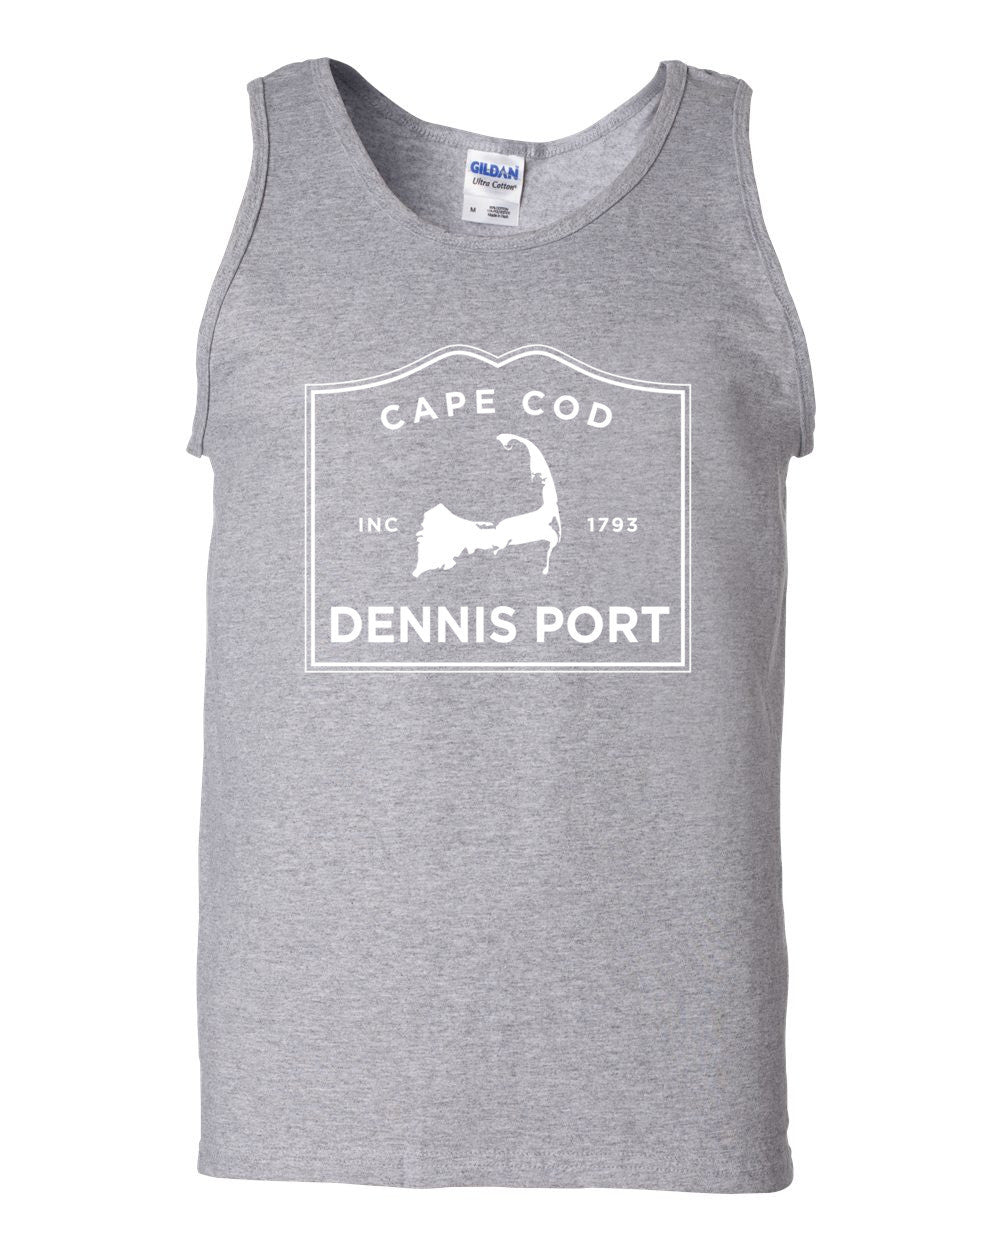 Dennis Port Cape Cod Tank Top